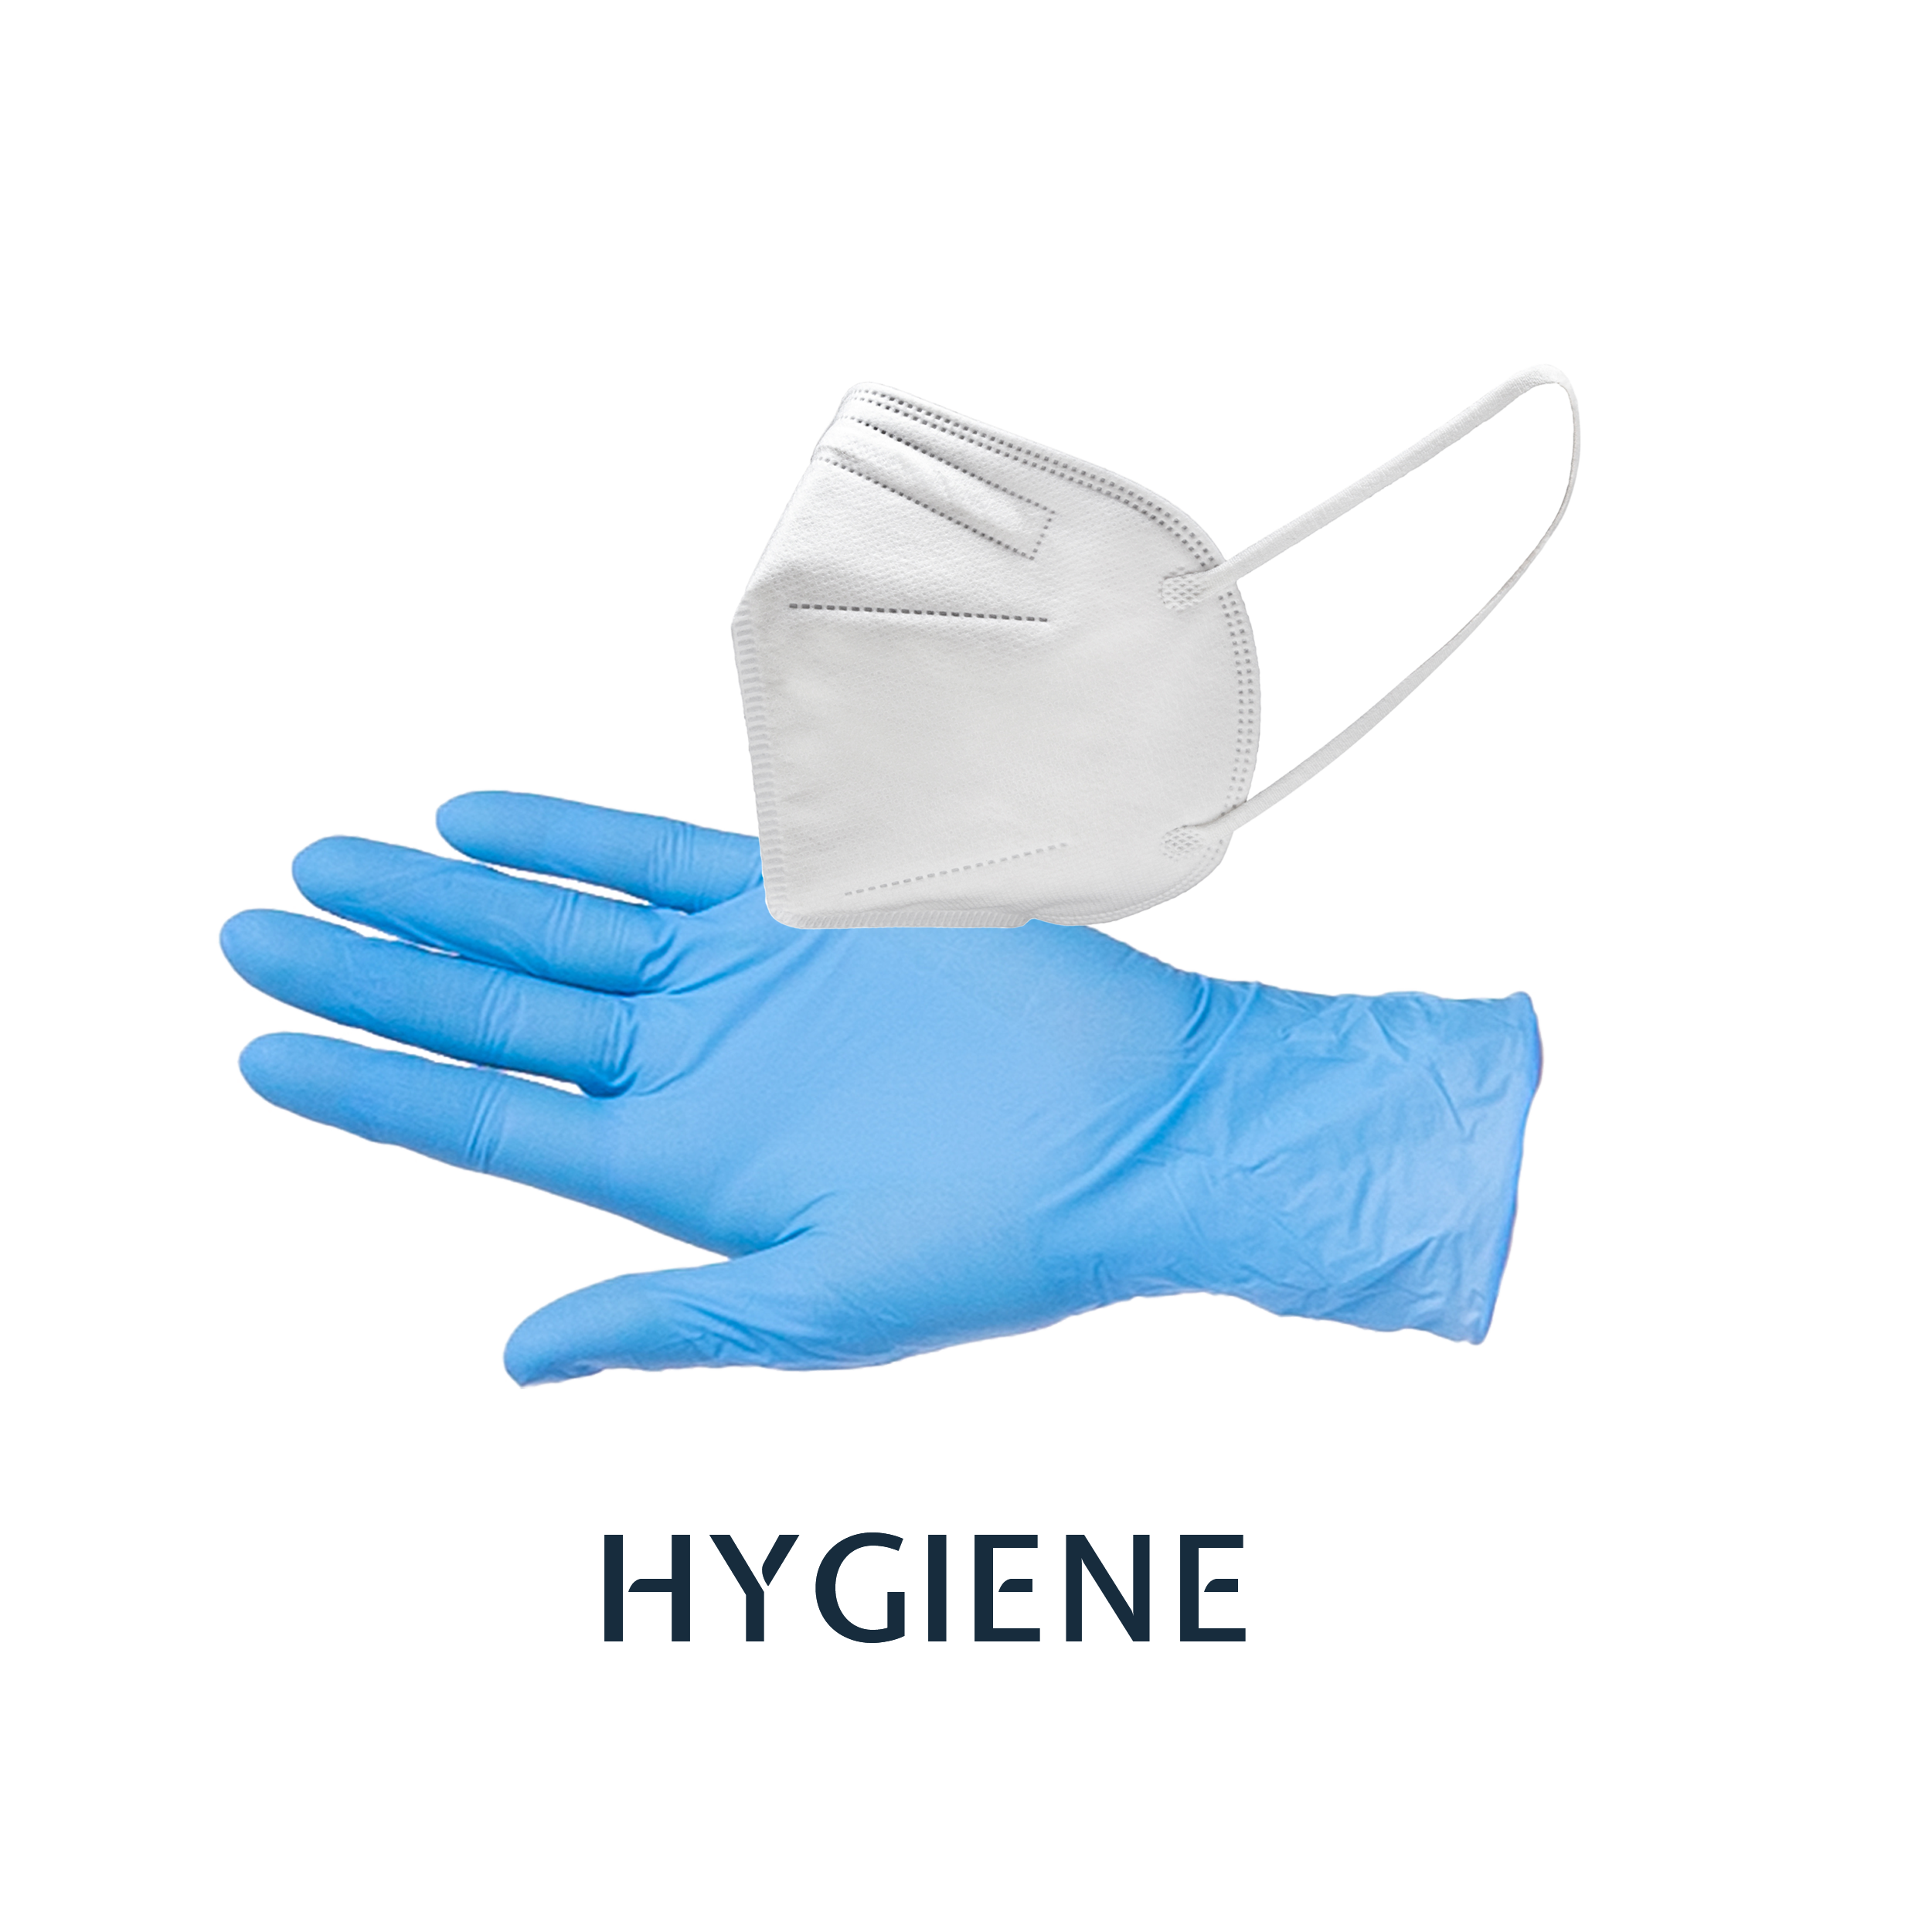 hygiene_portfolio